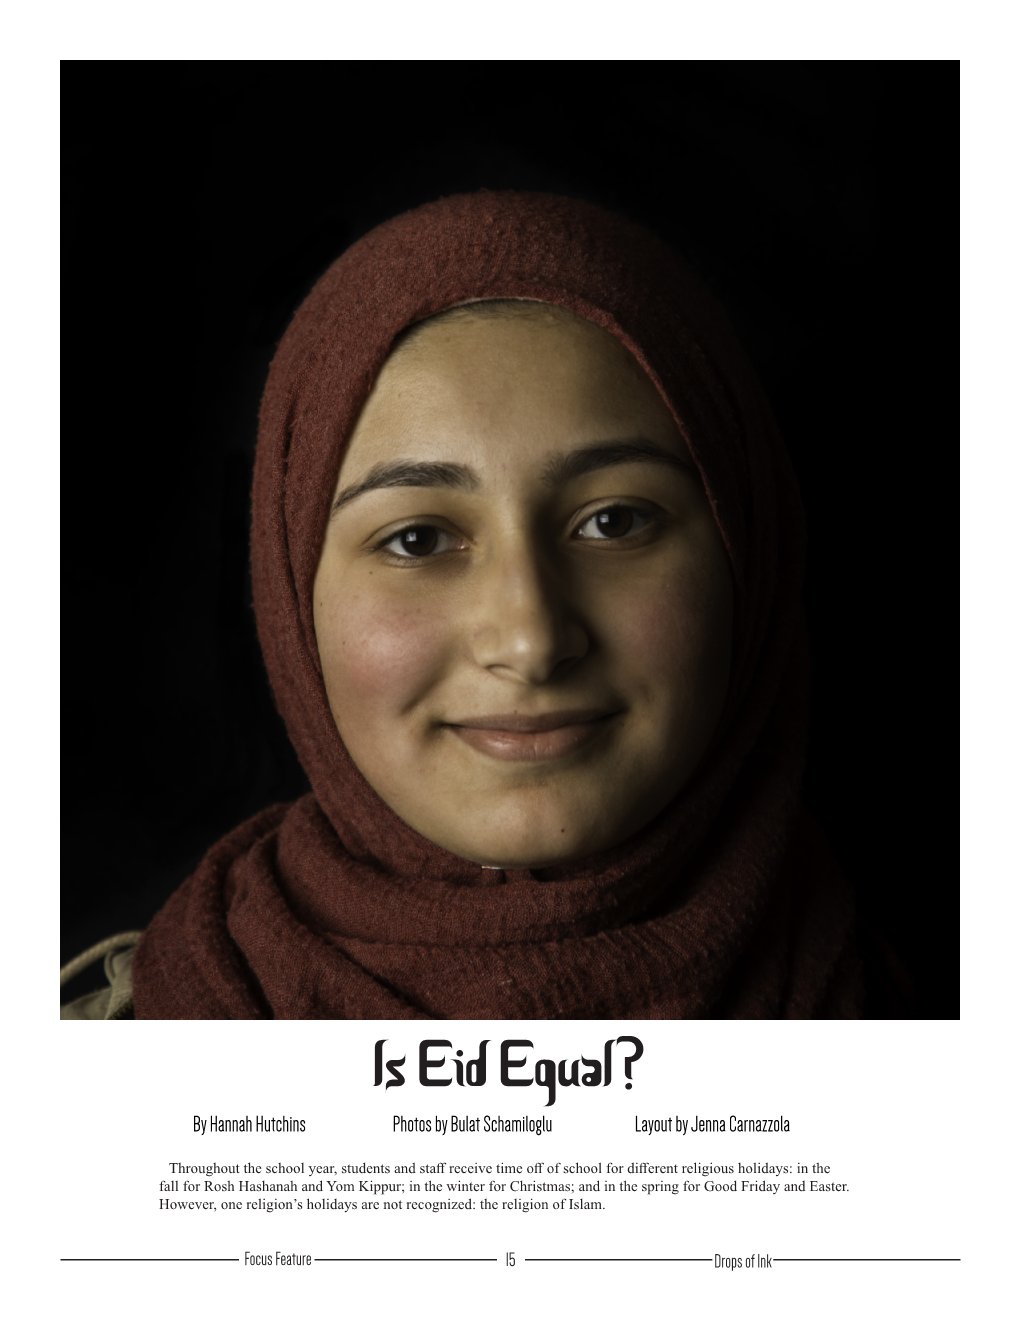 Is Eid Equal? by Hannah Hutchins Photos by Bulat Schamiloglu Layout by Jenna Carnazzola